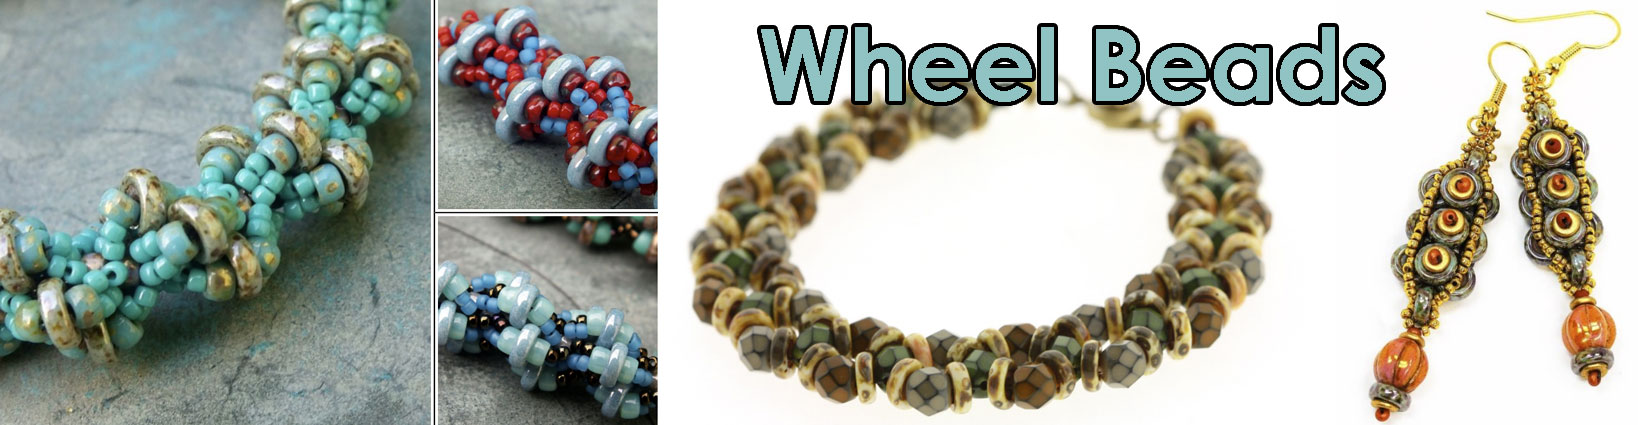 Wheel Beads